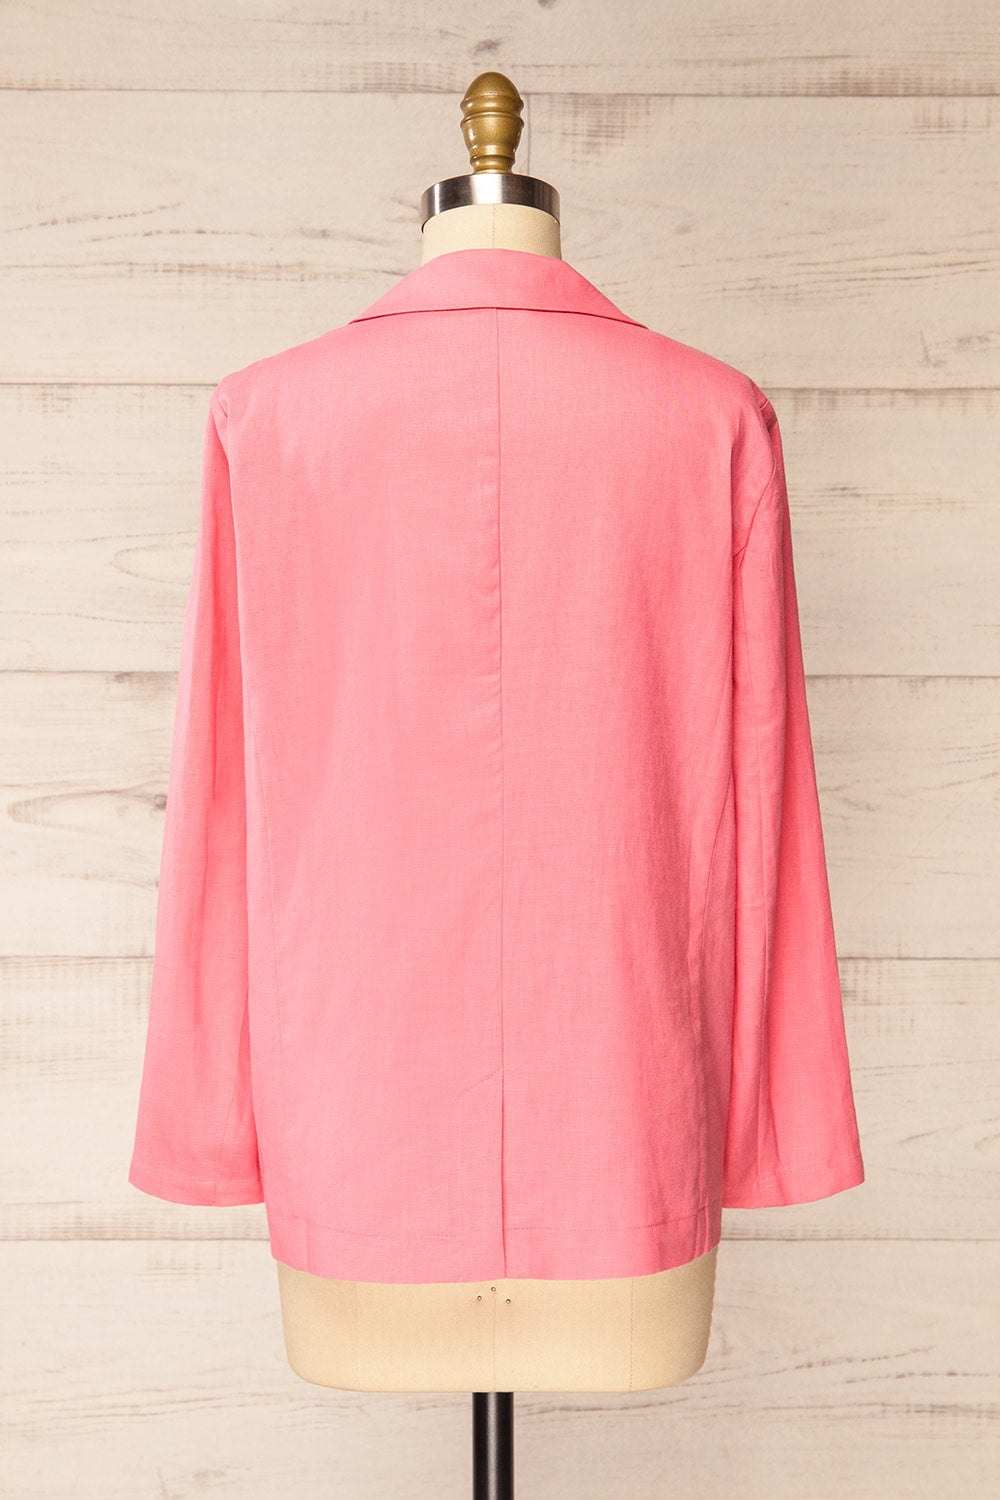 Sucunduri Pink Light Linen Blazer | La petite garçonne back view